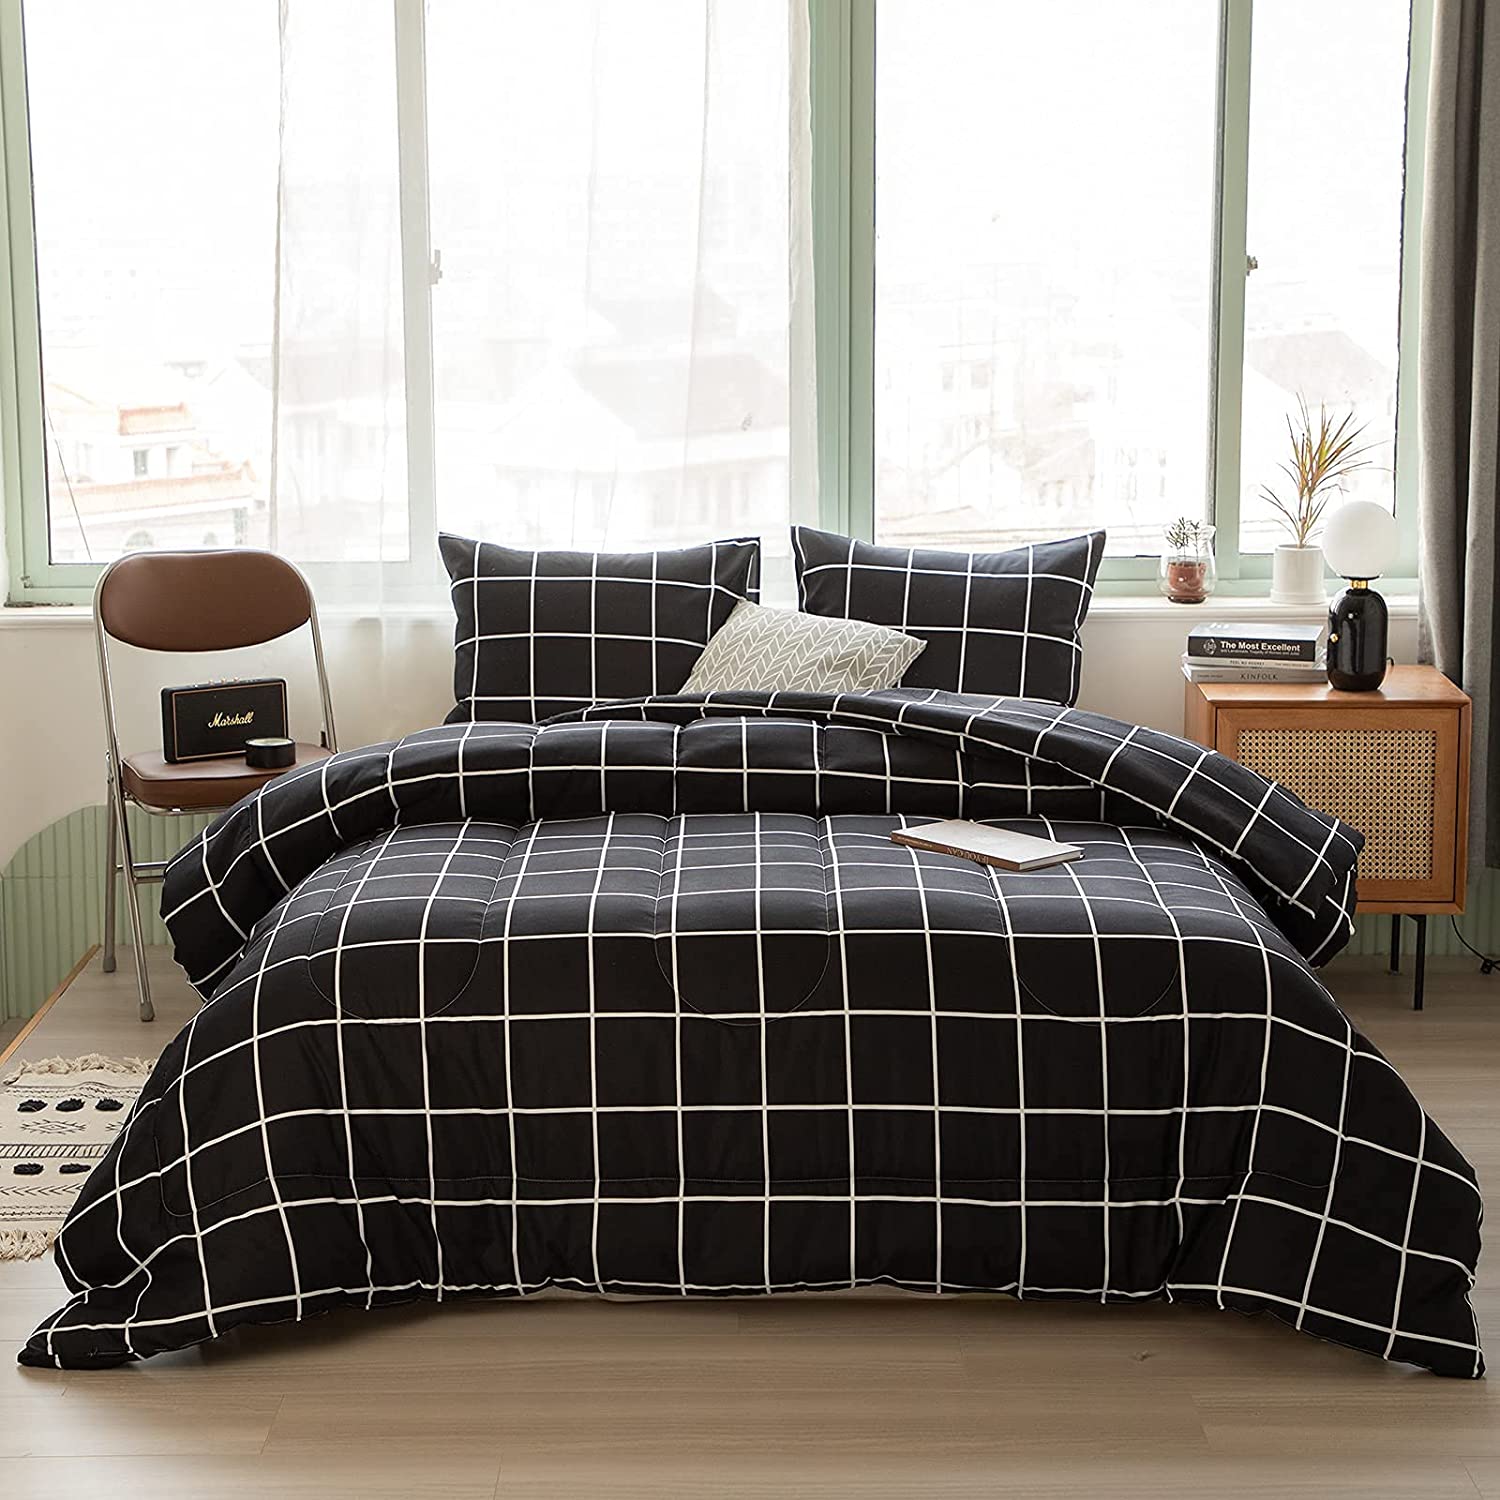 Black Grid Bed Set - Aesthetic Bedding